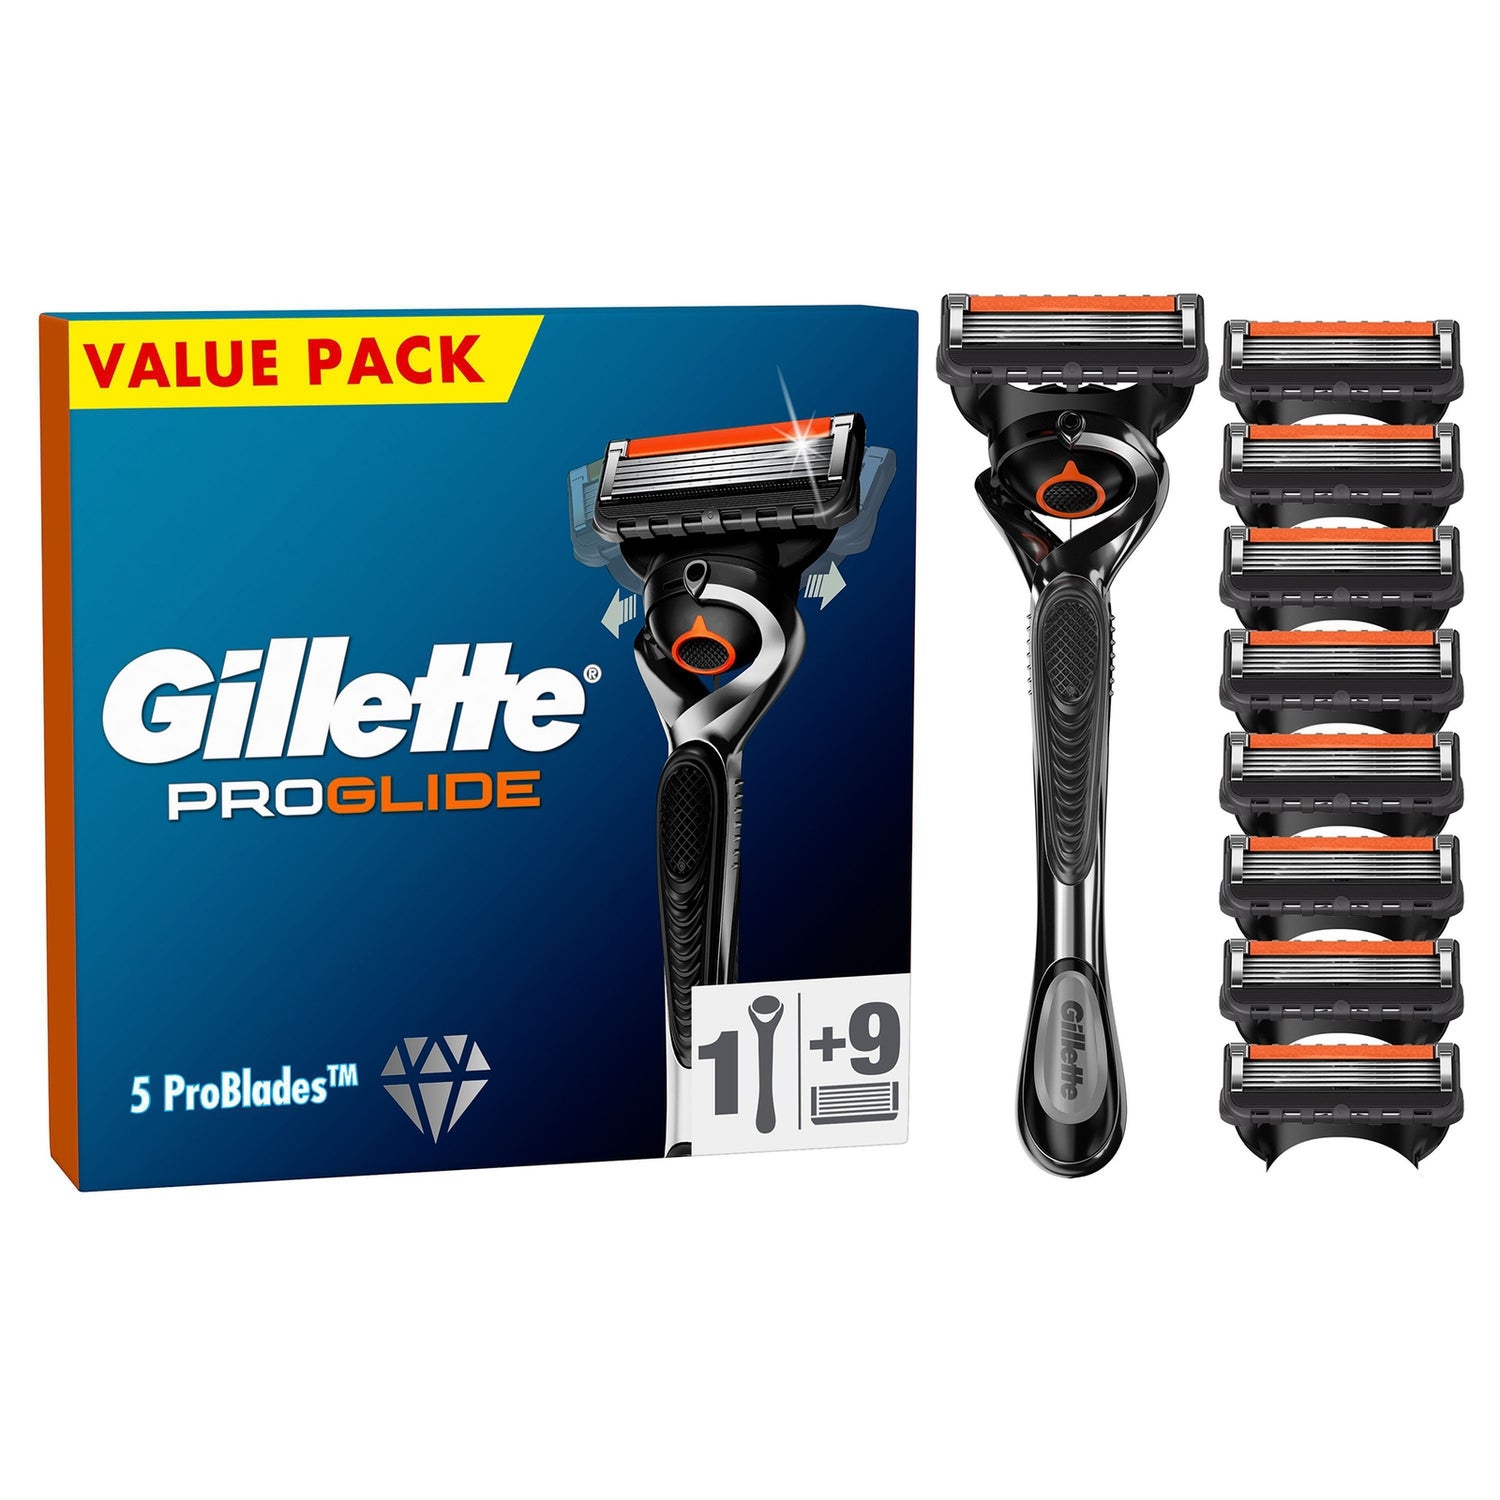 Gillette ProGlide Value Pack - Razor + 9 Razor Blades